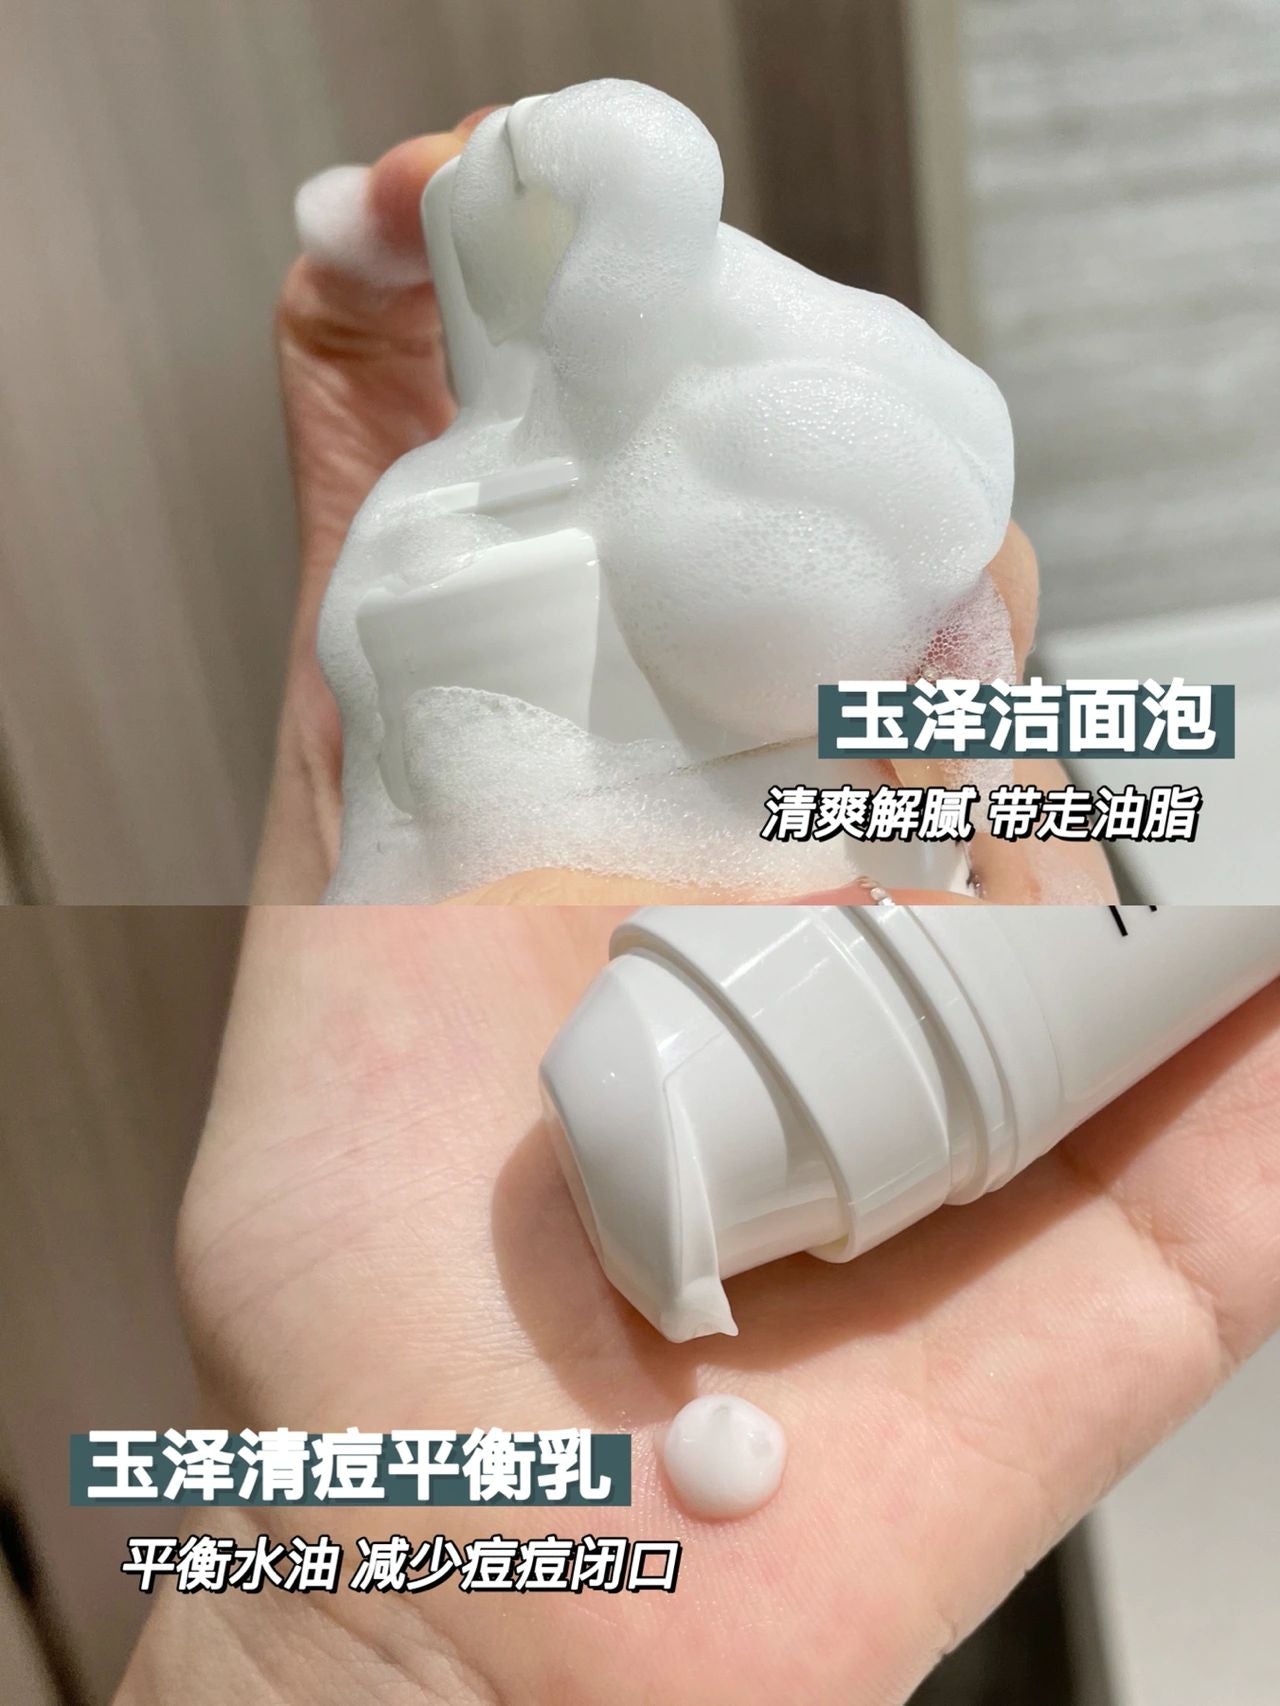 Dr.Yu Facial Cleansing Foam 150ml 玉泽净颜调护洁面泡